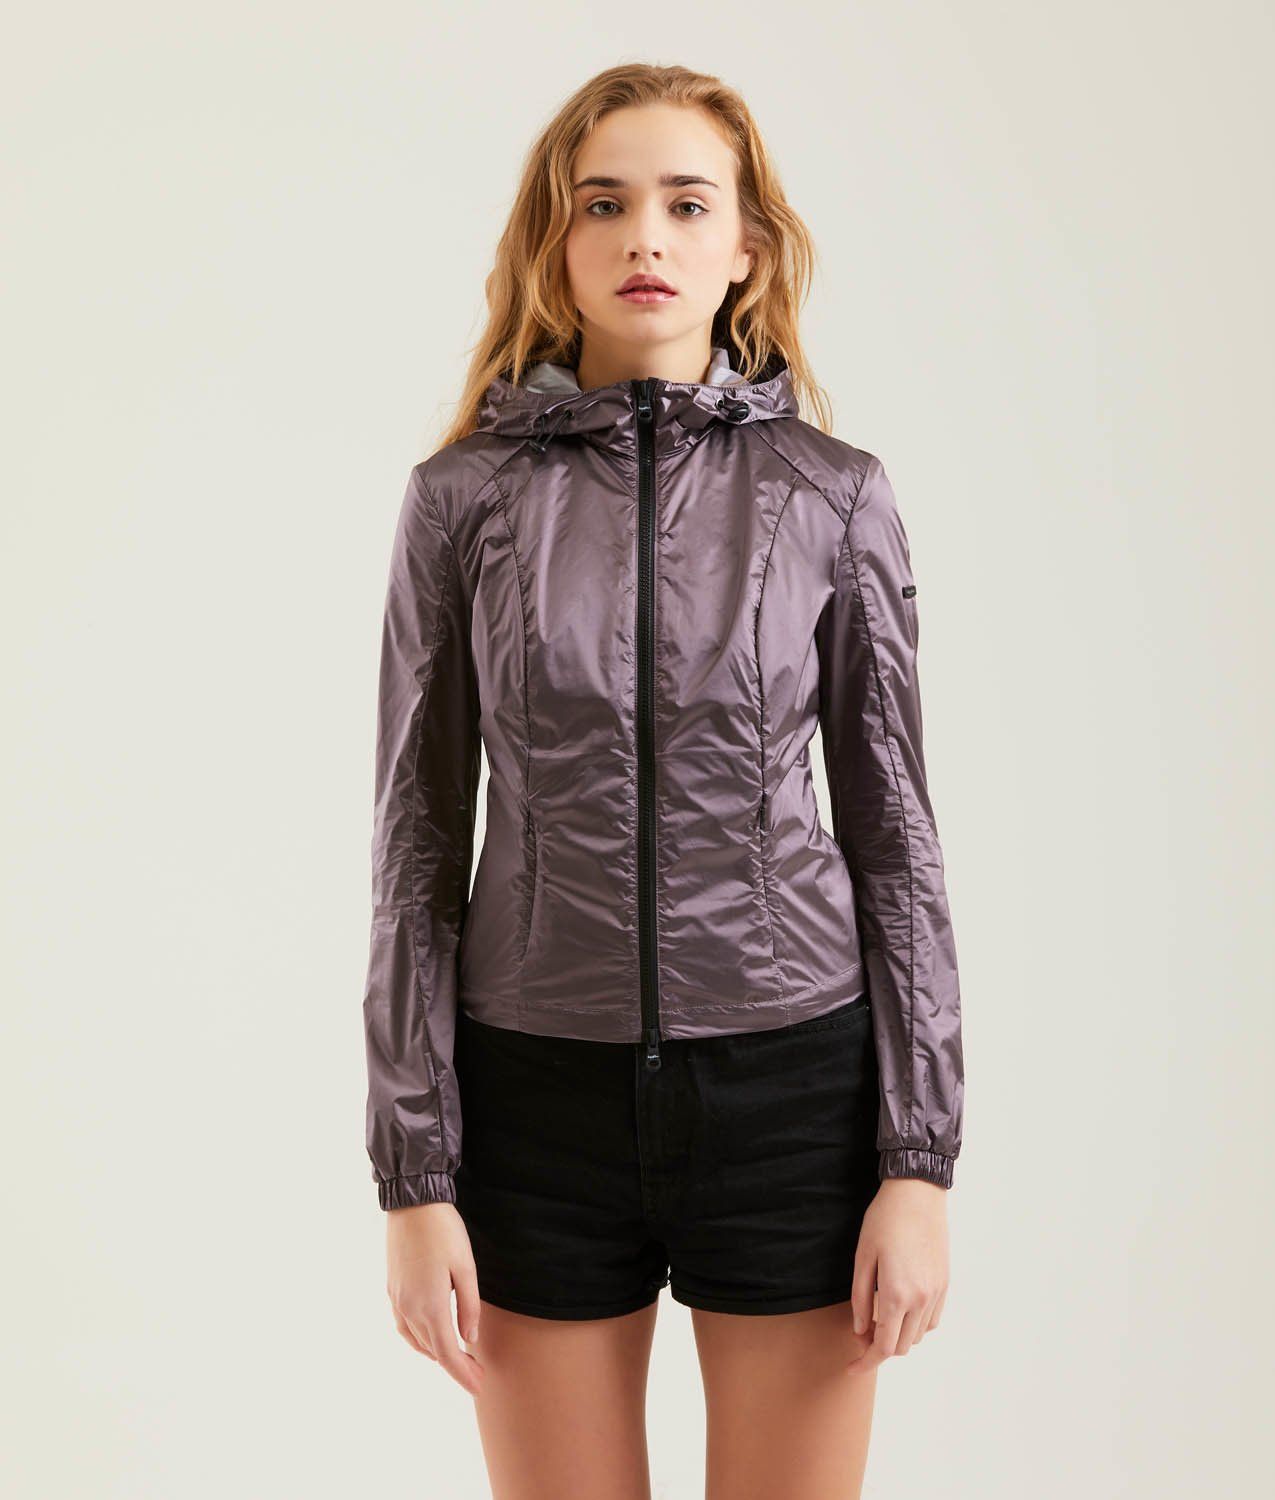 Refrigiwear Sleek Ultra-Light Metallic Nylon Women's Jacket